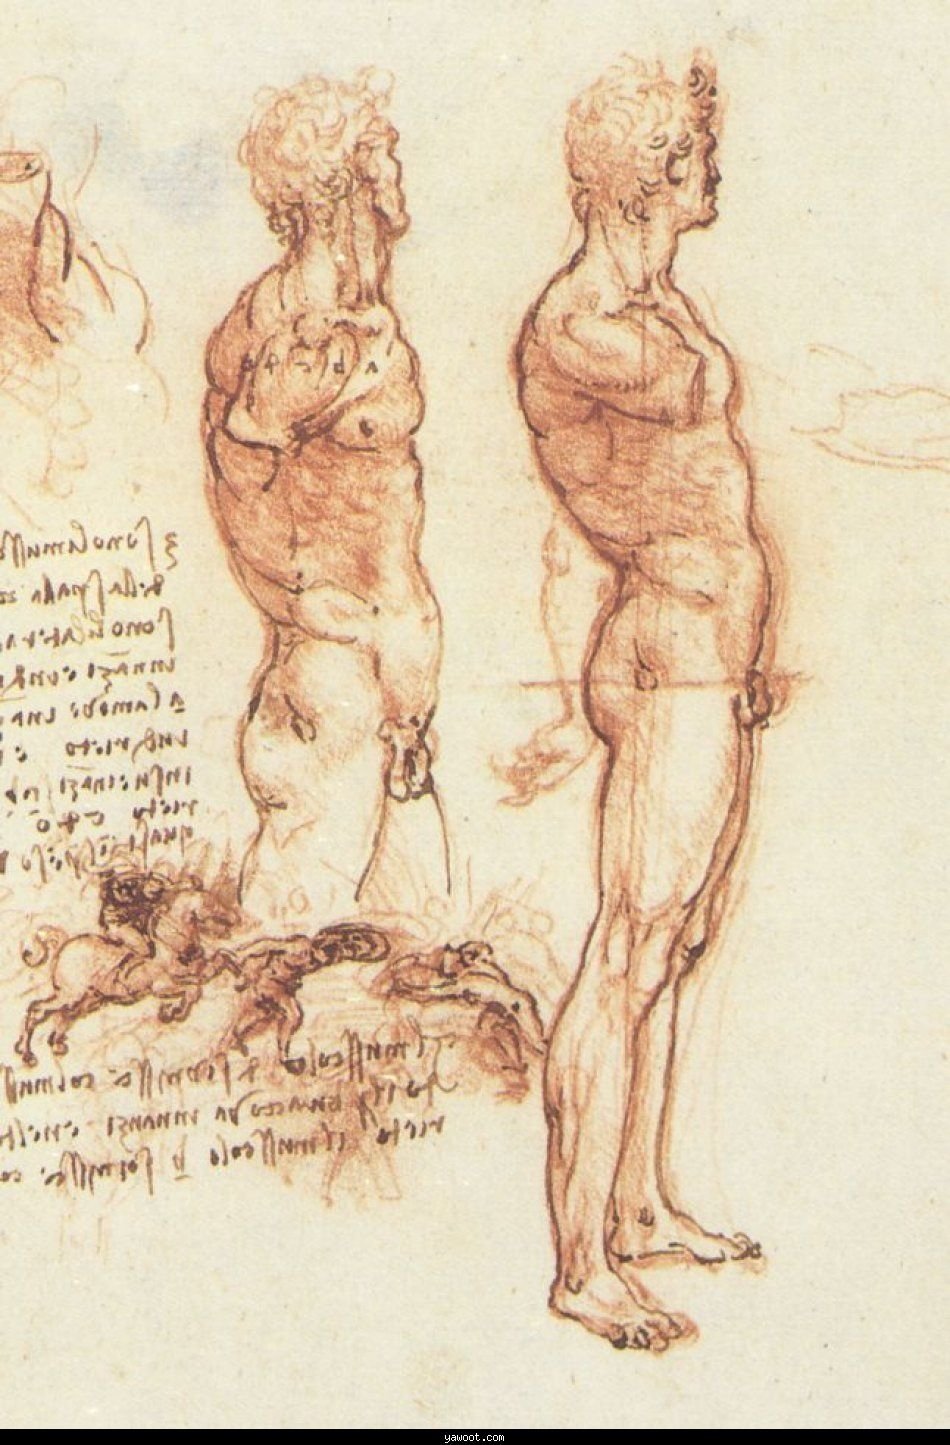 10 Nice Leonardo Da Vinci Used Drawings To Explore Ideas In anatomy scetch da vinci leonardo 1452 1519 leonardo da vinci 2022